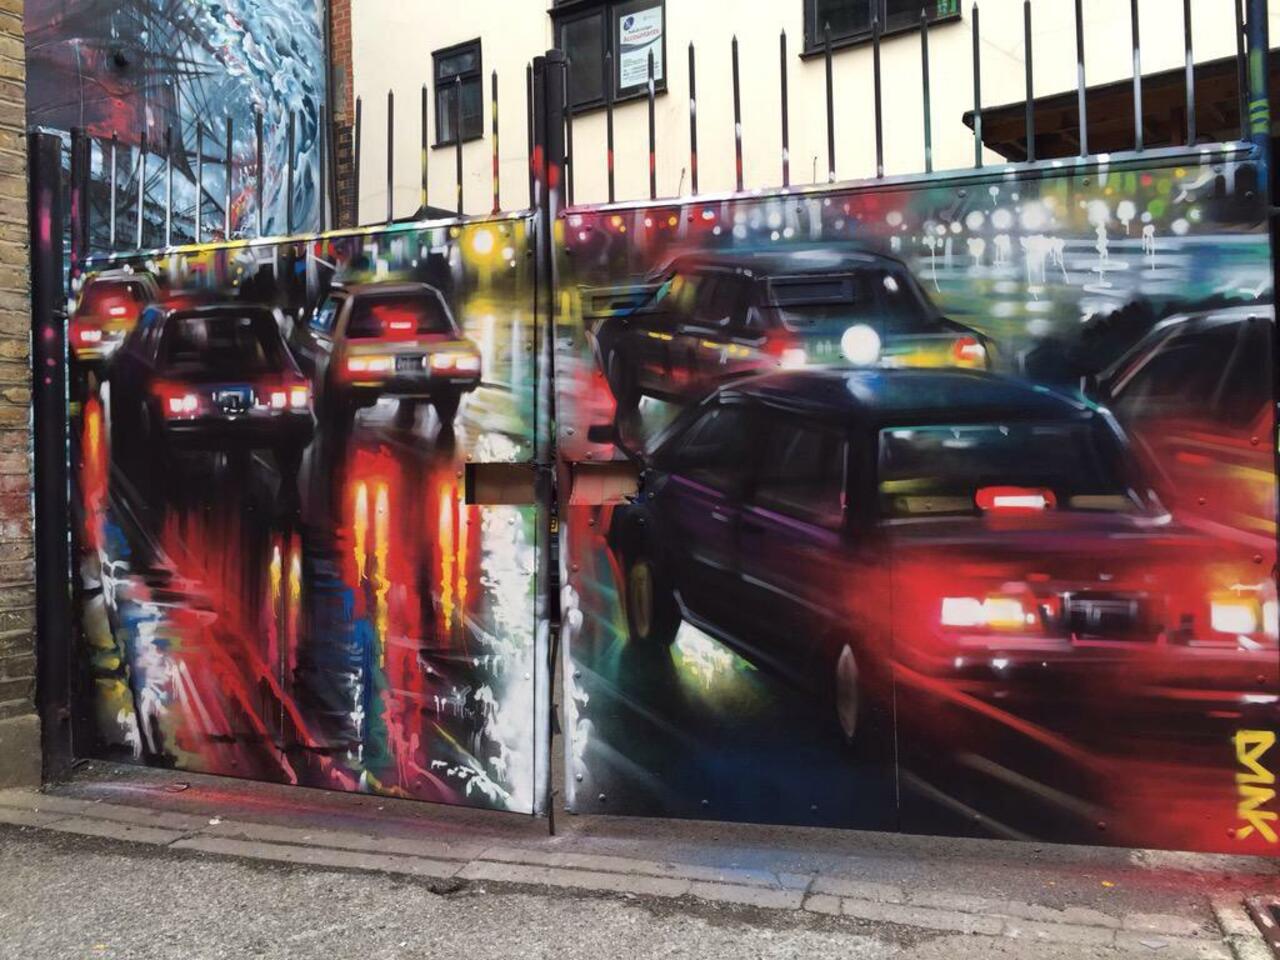 New Street Art by DanKitchener in Brick Lane London 

#art #graffiti #mural #streetart http://t.co/pIbCI6KR0D